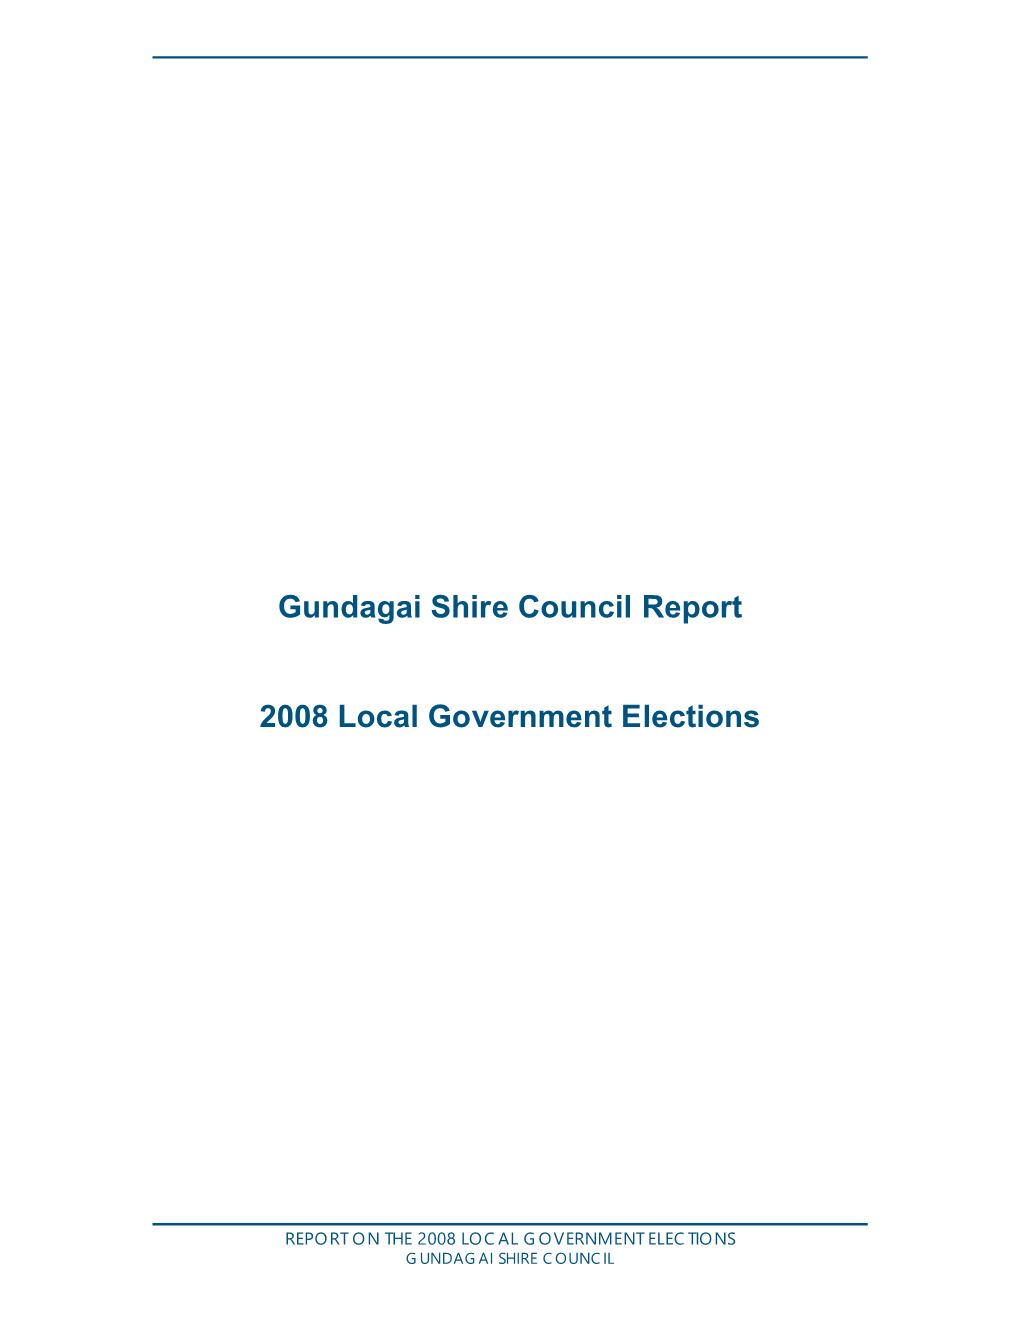 Gundagai Shire Council Report 2008 Local Government Elections